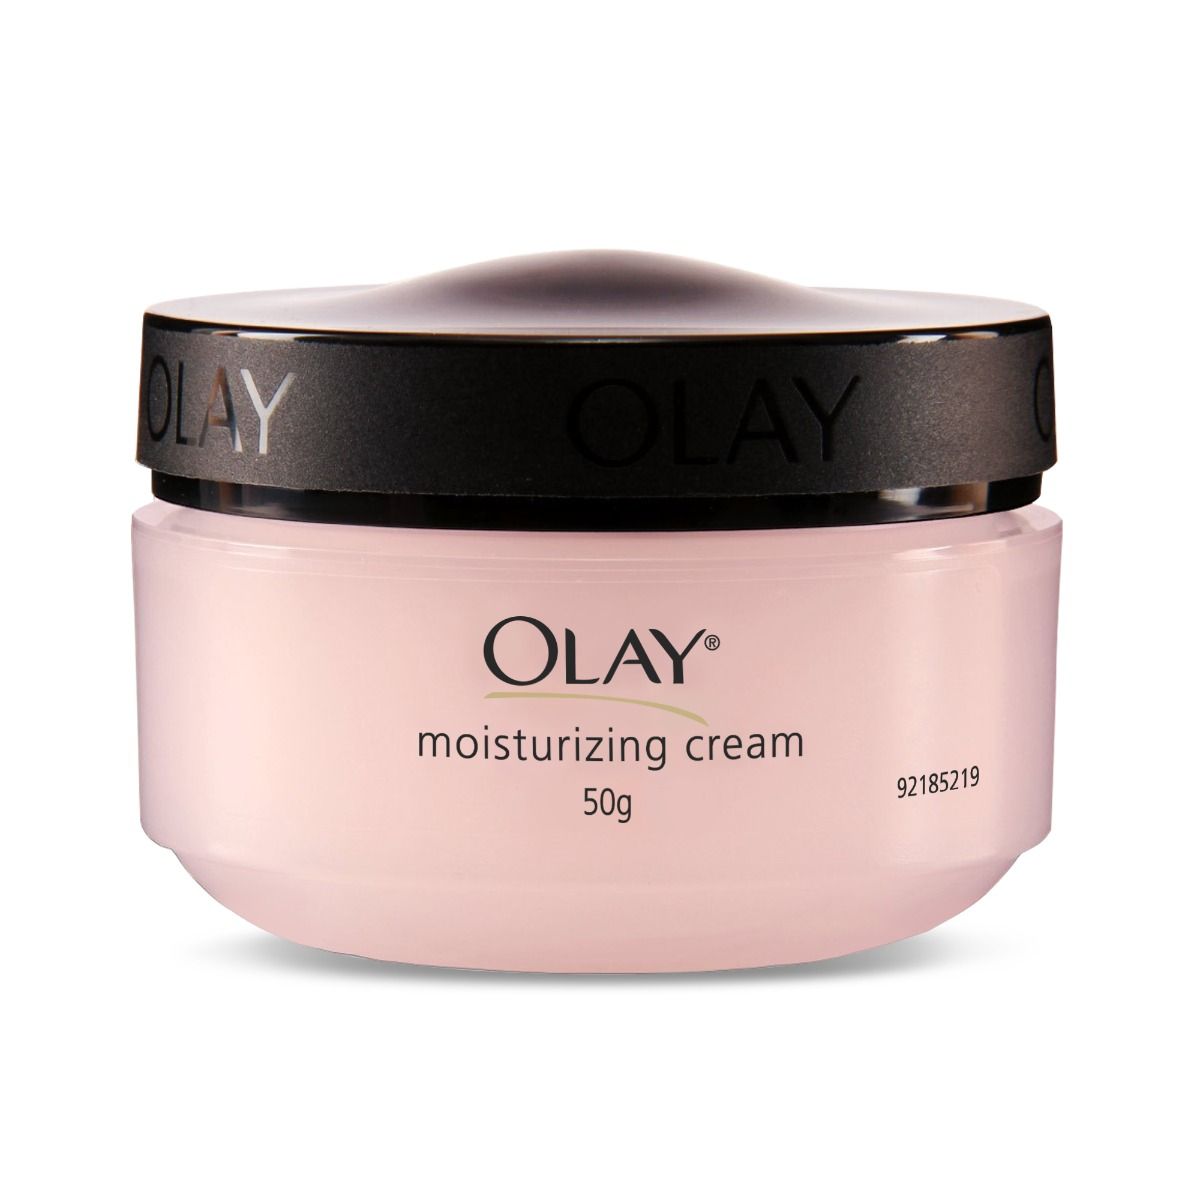 Olay Moisturizing Cream, 50 gm, Pack of 1 